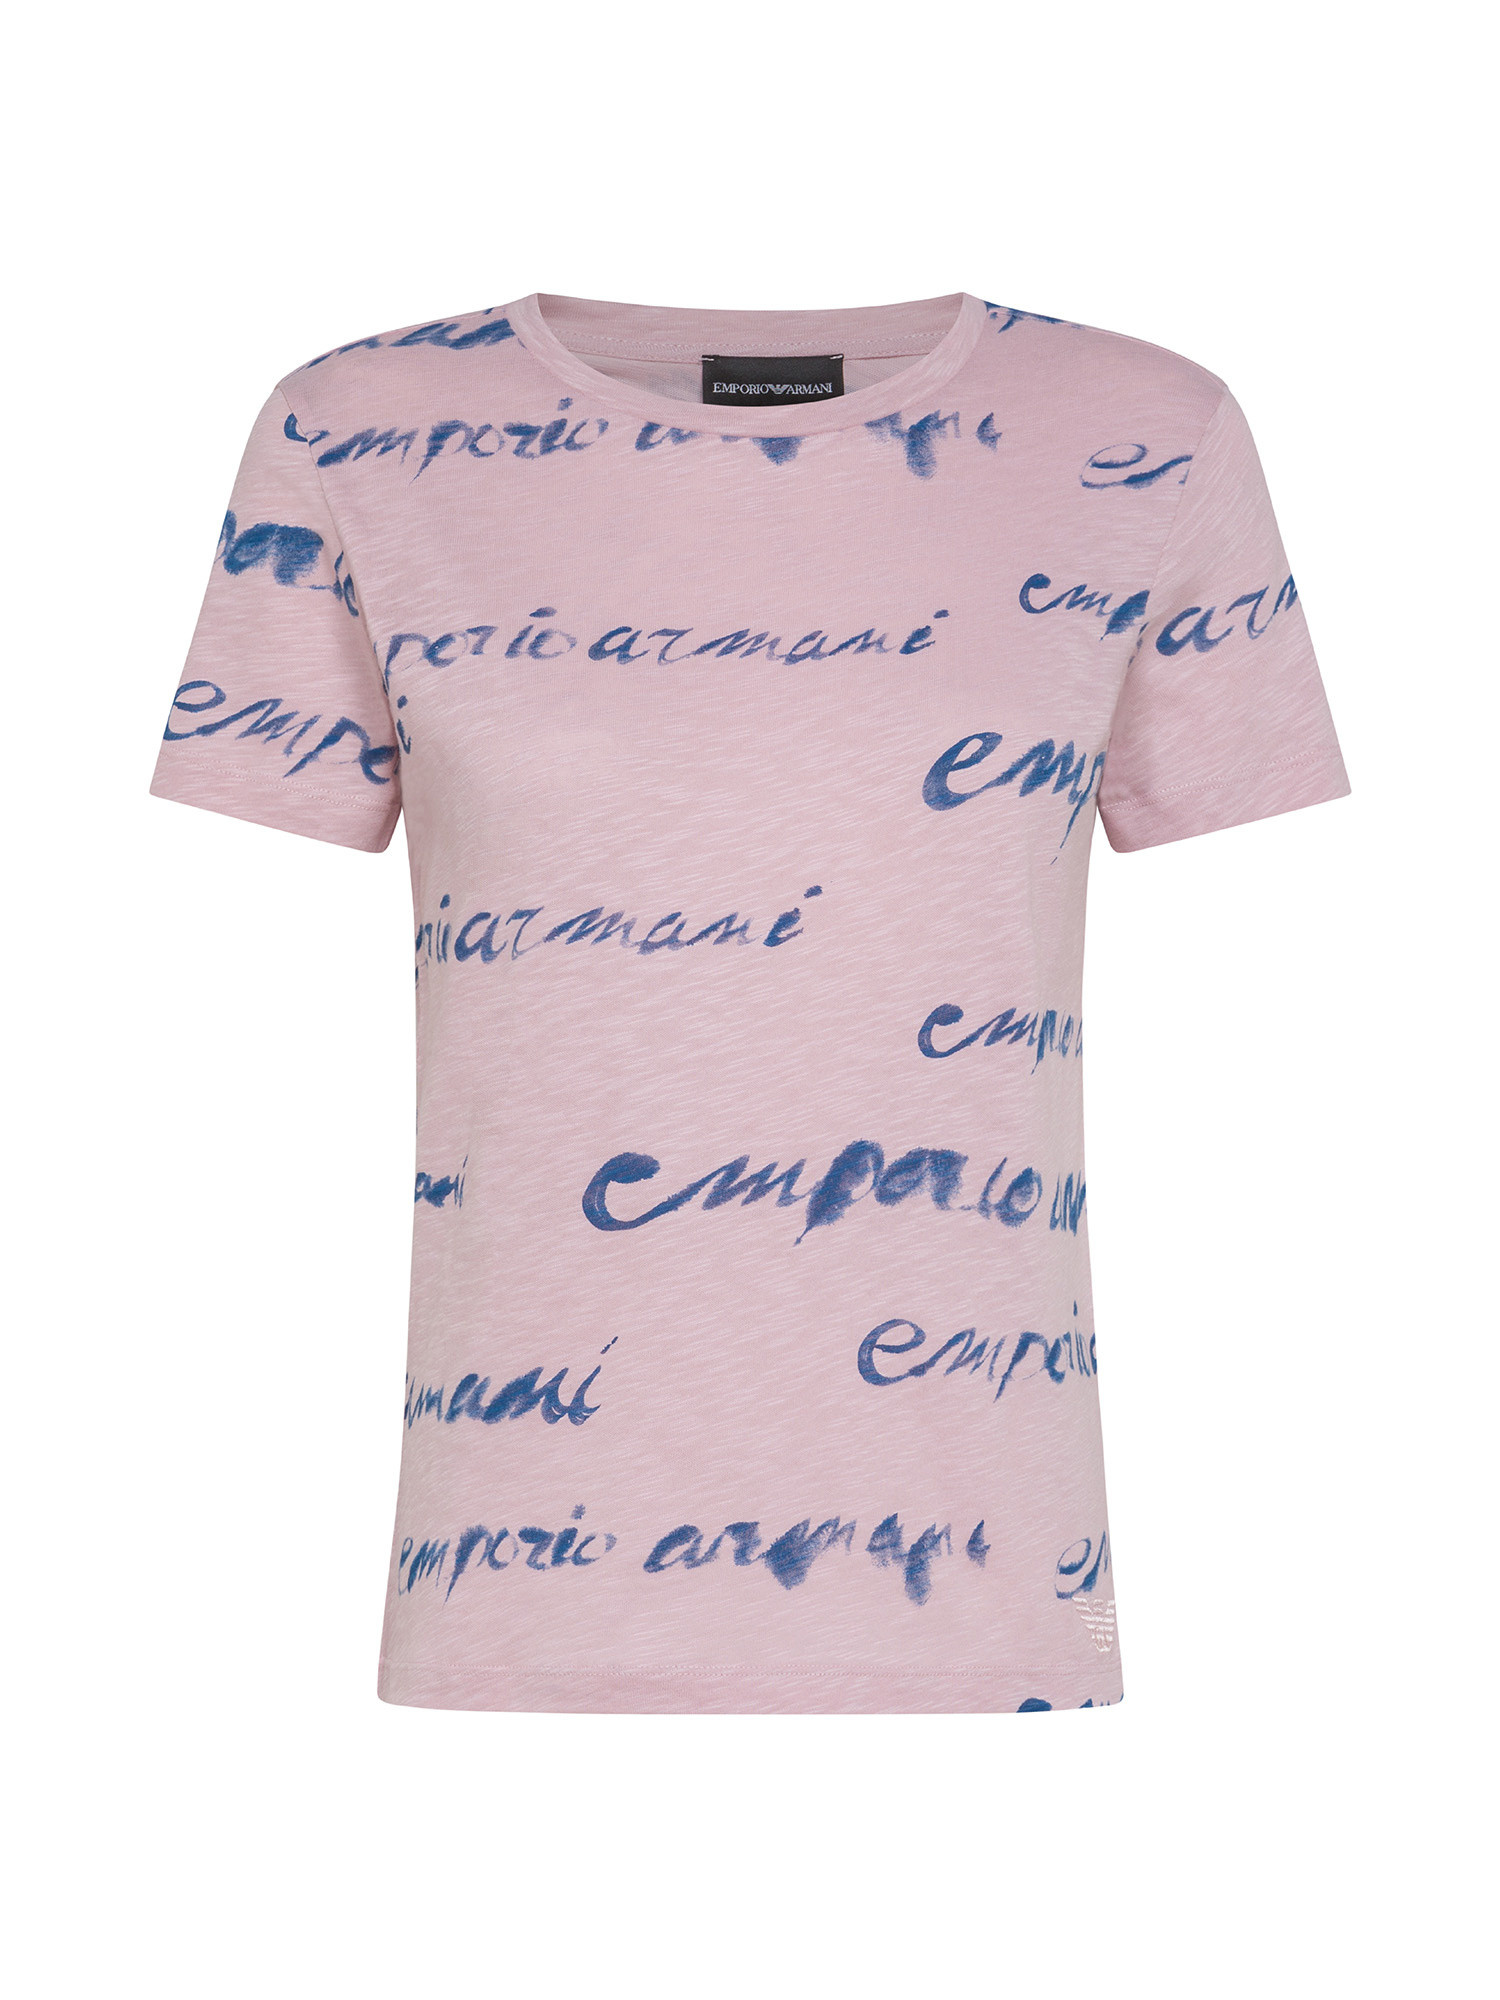 Emporio Armani - T-shirt in cotone con scritta logo, Rosa, large image number 0